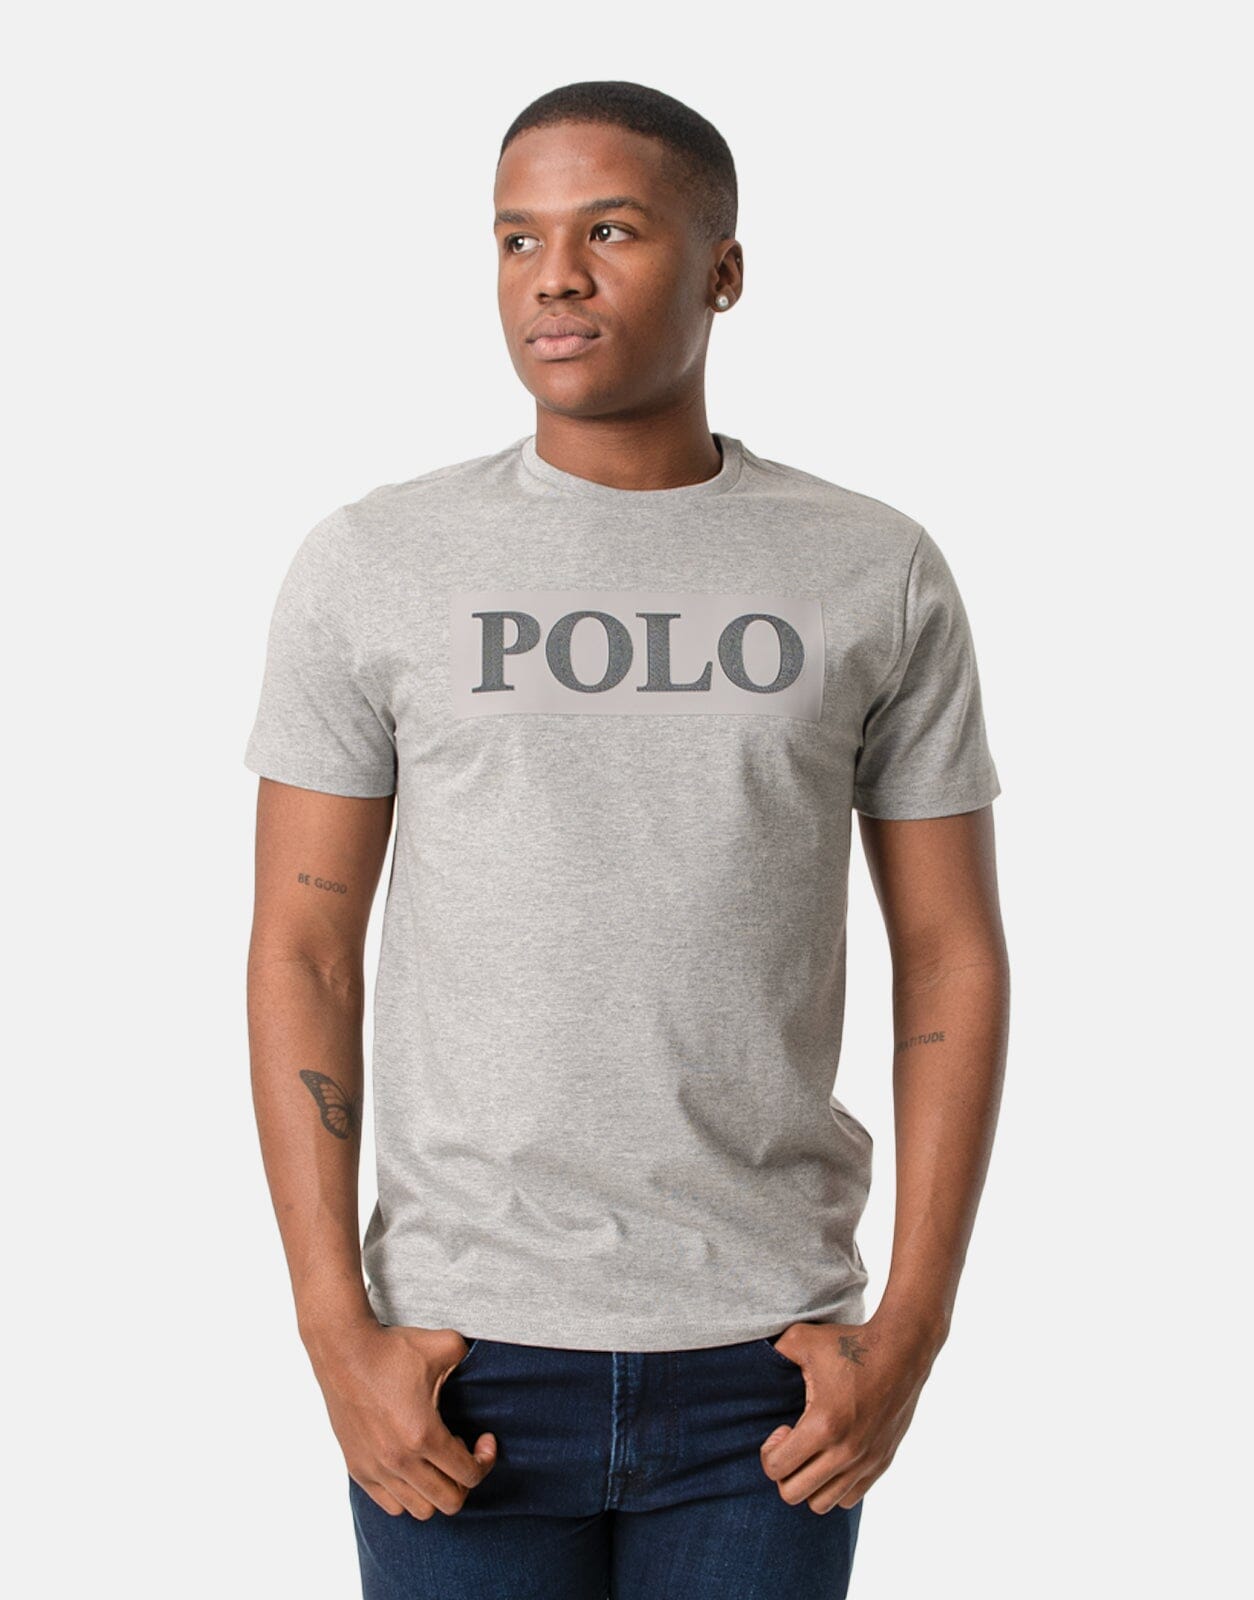 Polo Logo T-Shirt Grey - Subwear